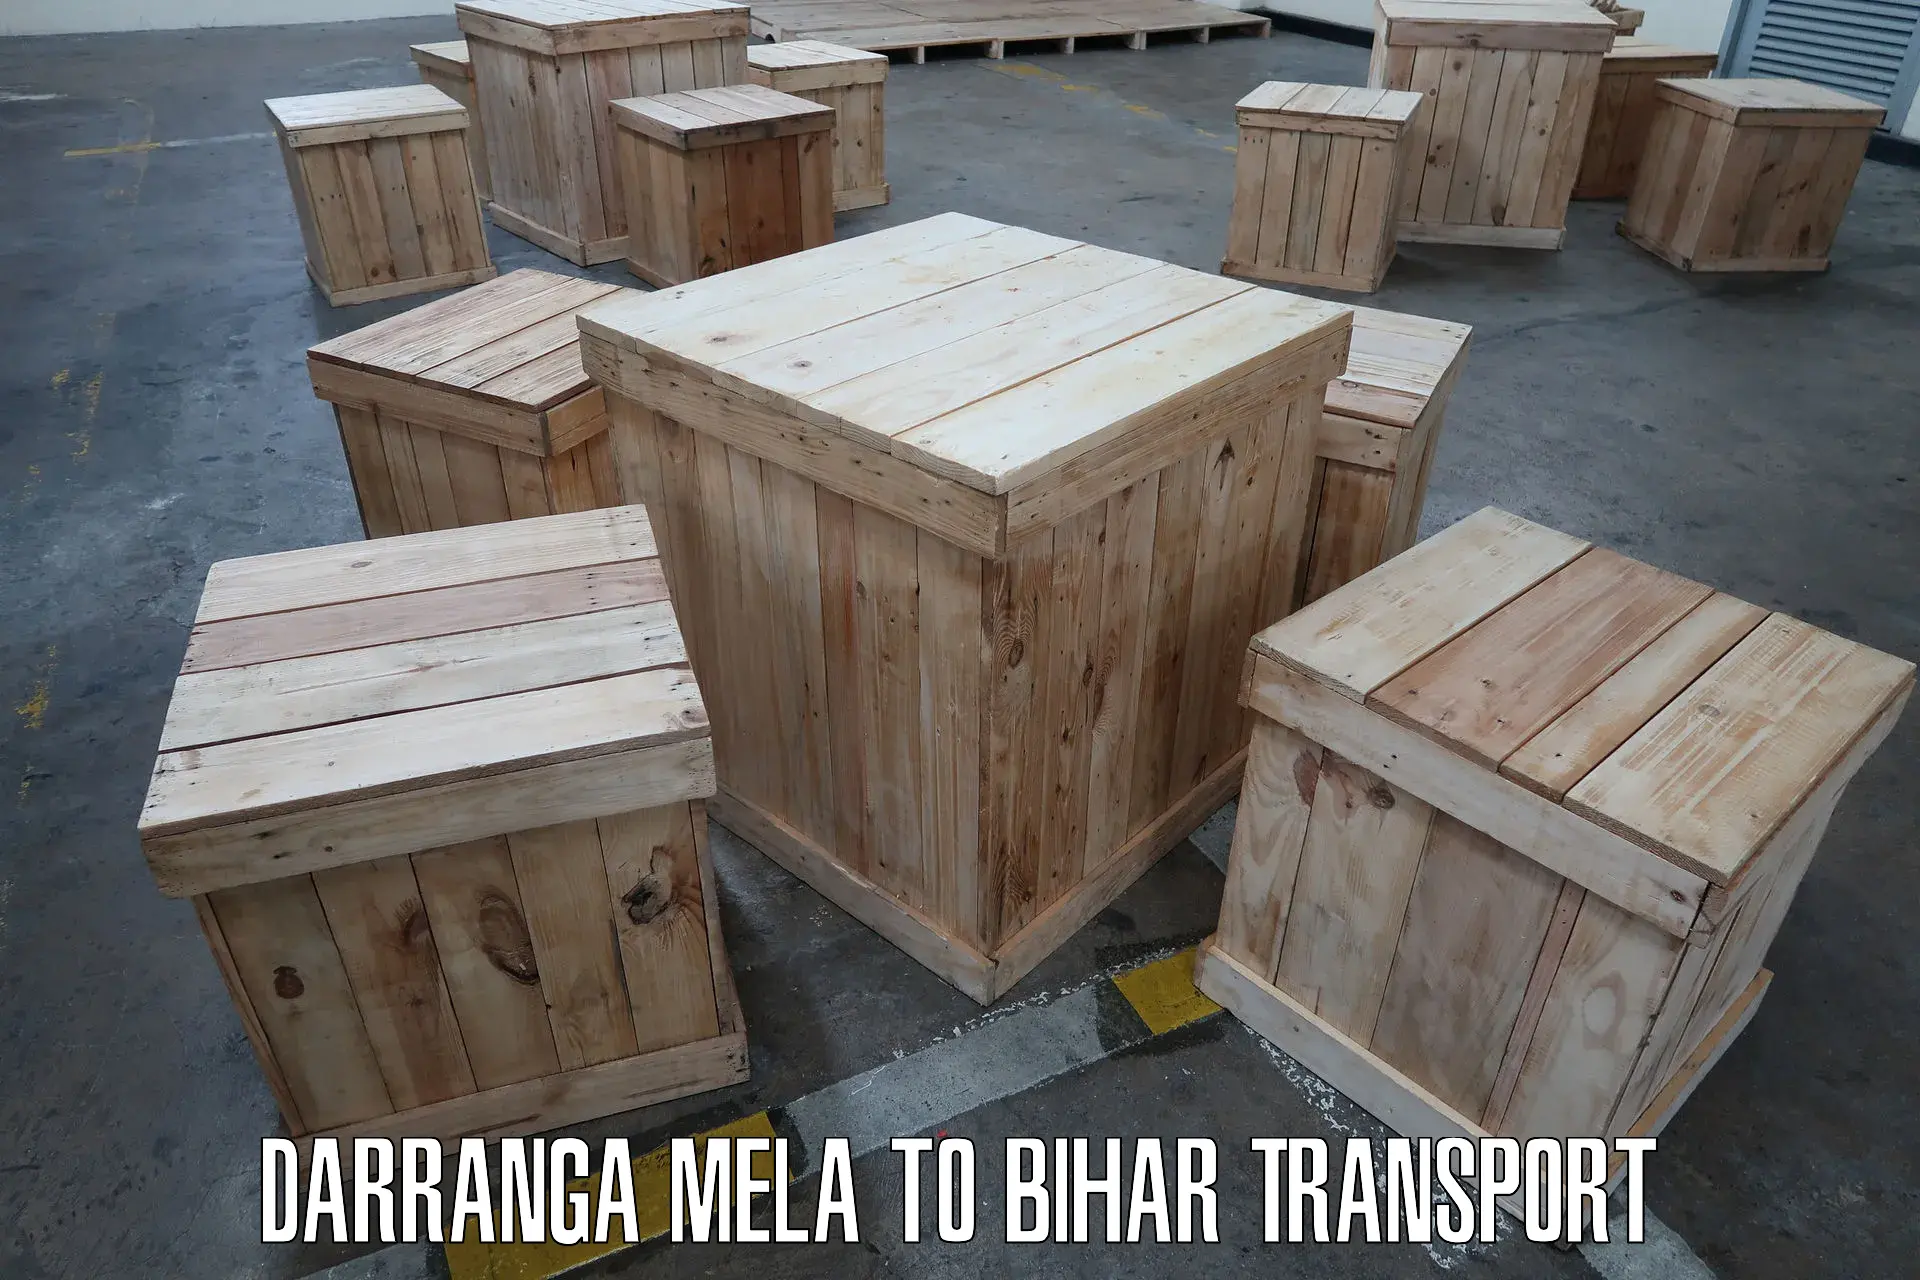 Transport in sharing Darranga Mela to Chainpur